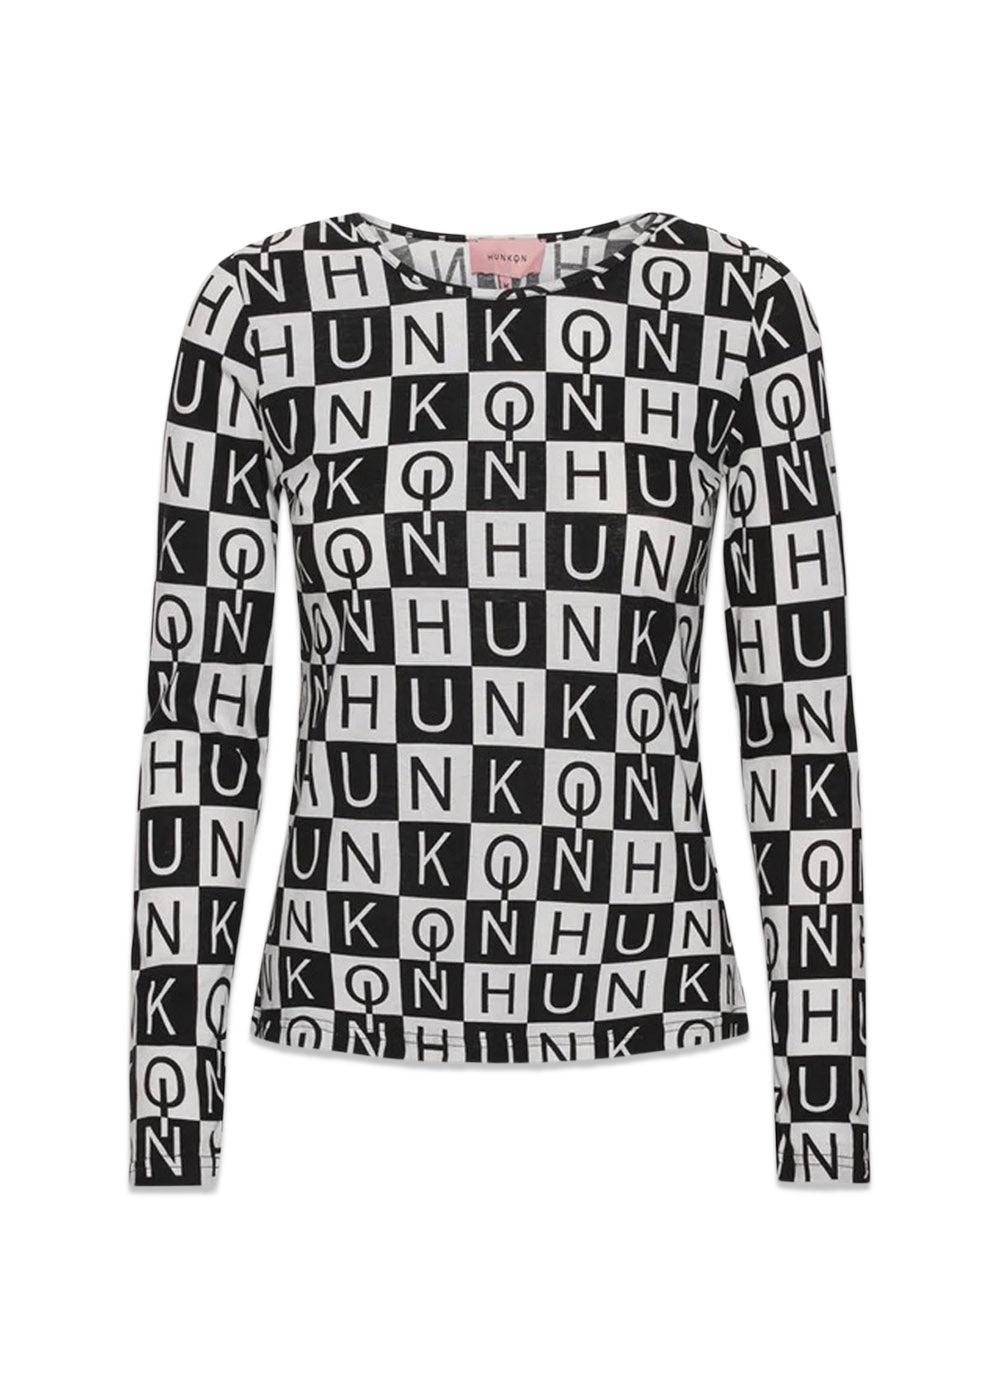 HUNKØN's Checkmate Longsleeve - Checkmate Art Print. Køb blouses her.